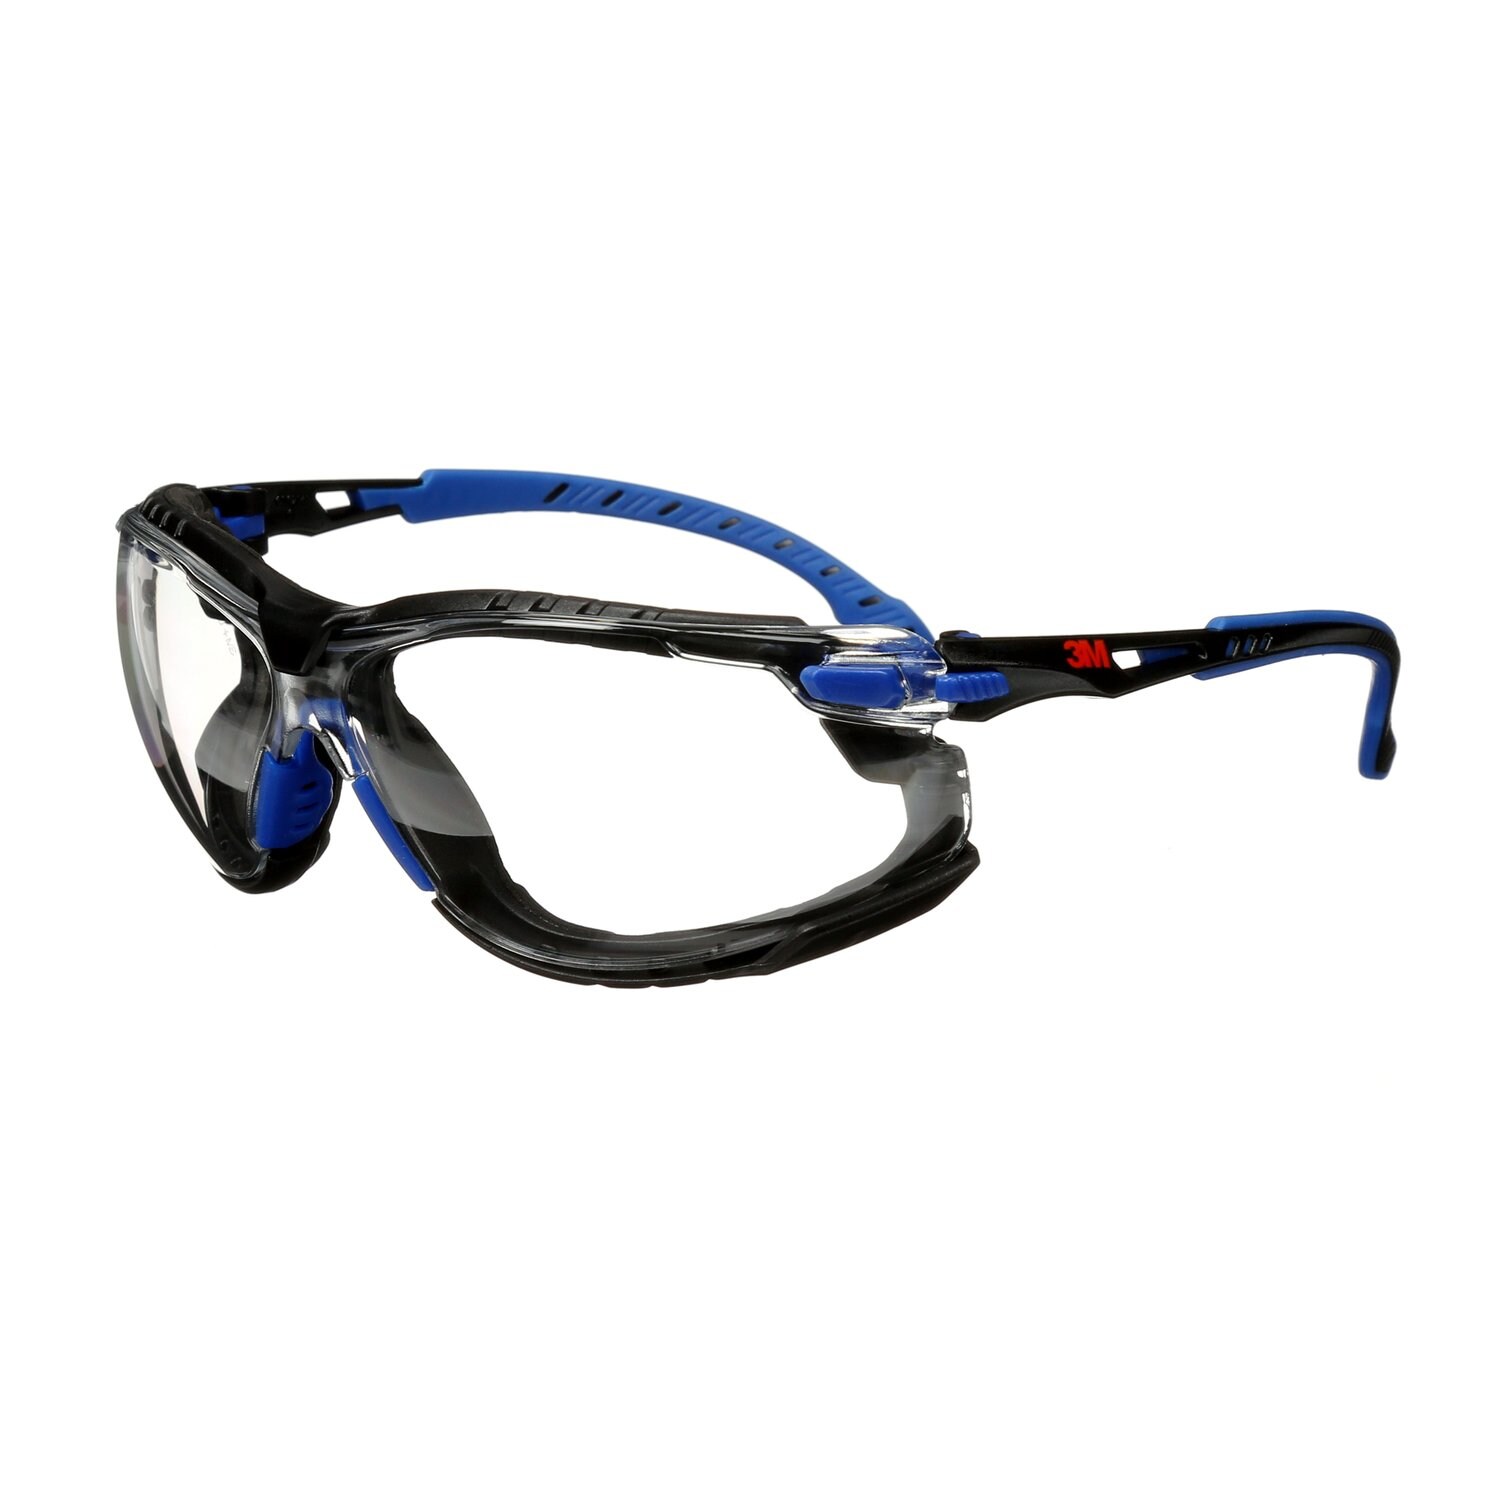 7100079186 - 3M Solus Safety Glasses 1000-Series S1101SGAF-KT, Kit, Foam, Strap,
Black/Blue, Clear Scotchgard Anti-fog lens, 20 EA/Case